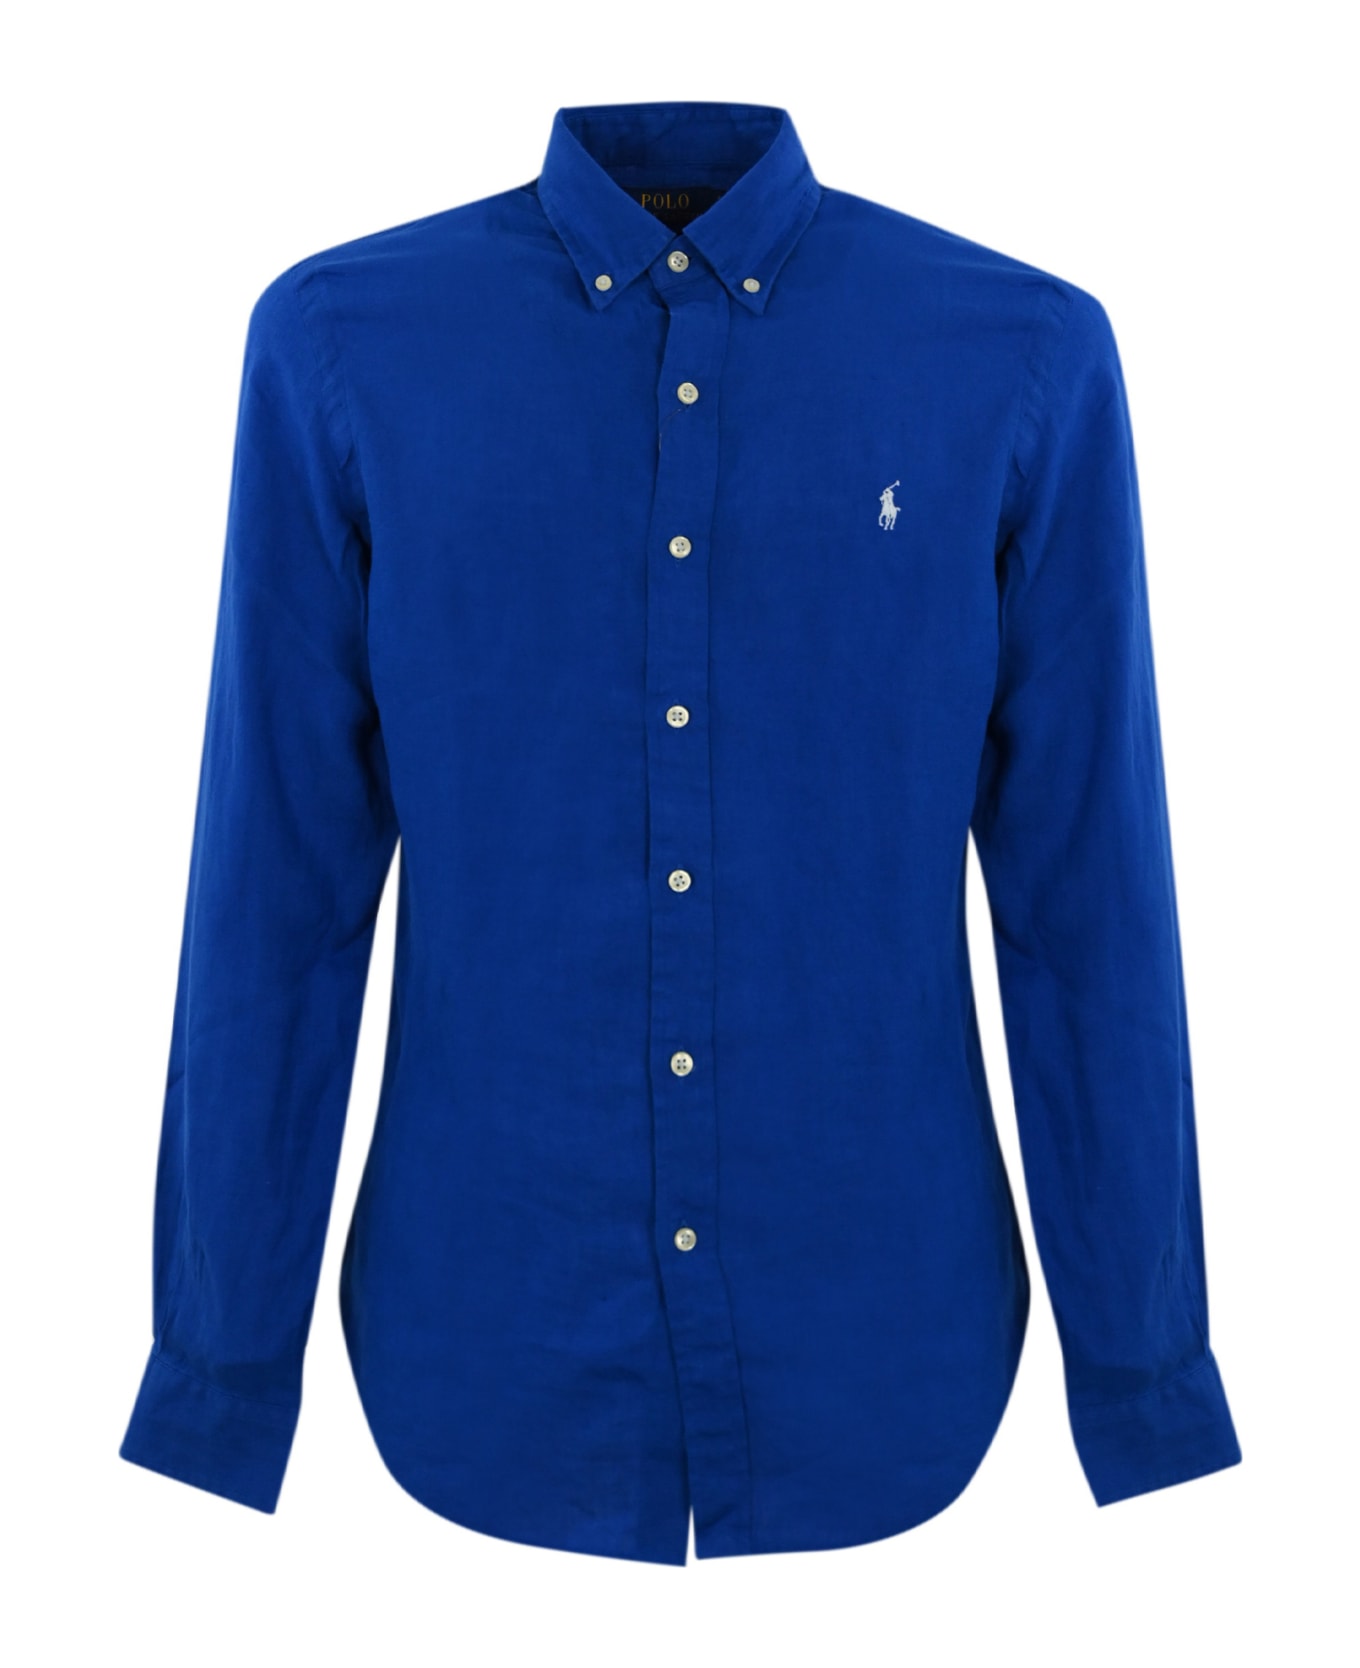 Polo Ralph Lauren Shirt - HERITAGE BLUE